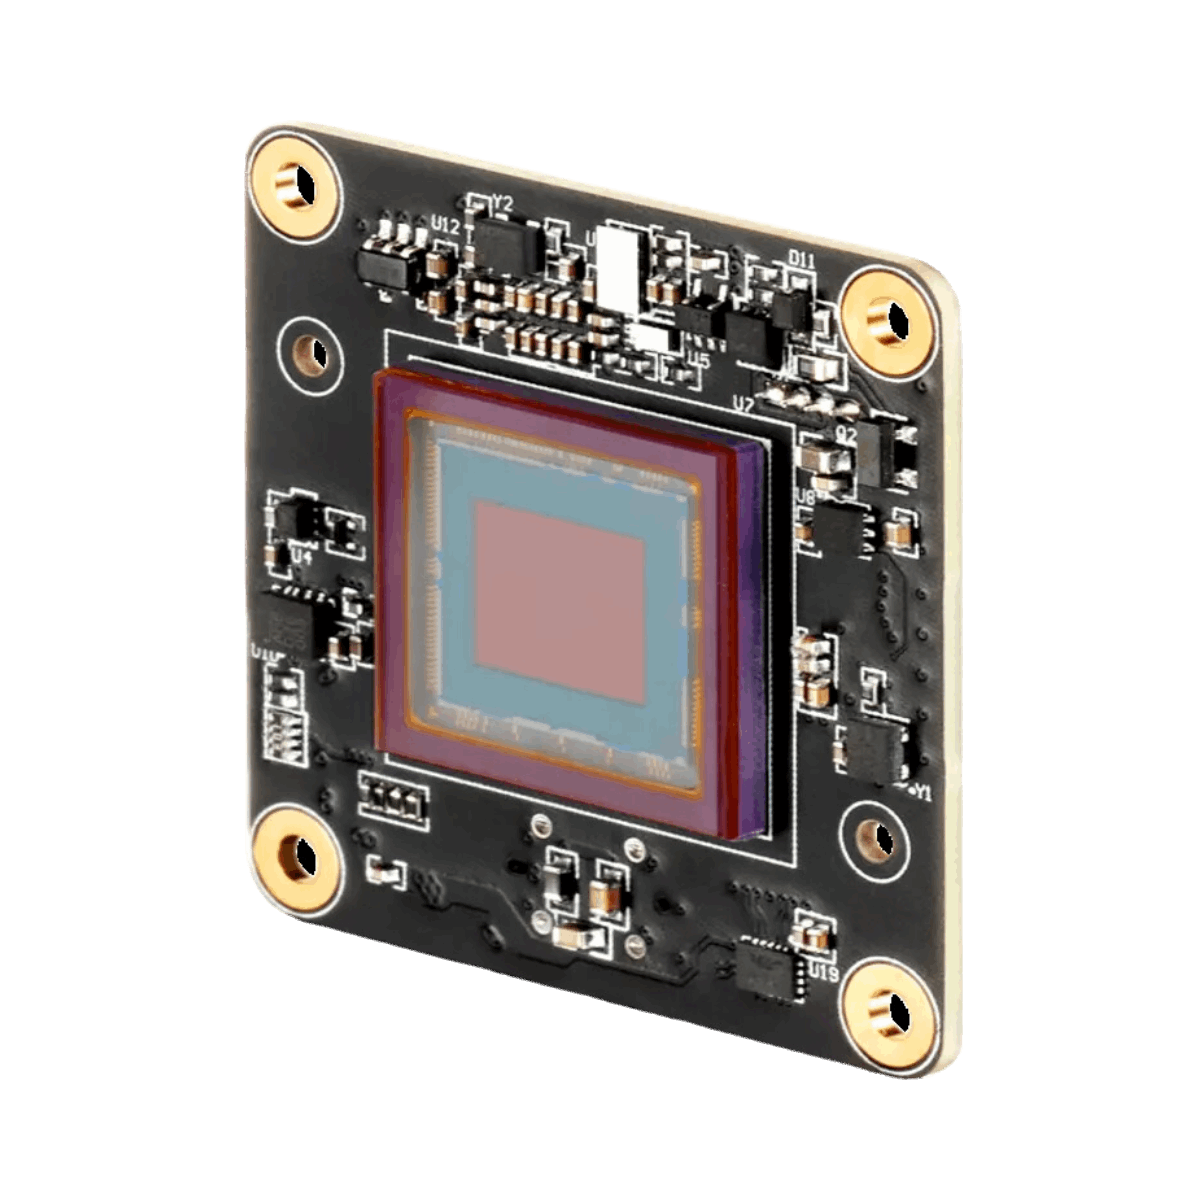 37U Series, The Imaging Source DFM 37UX264-ML Colour Camera